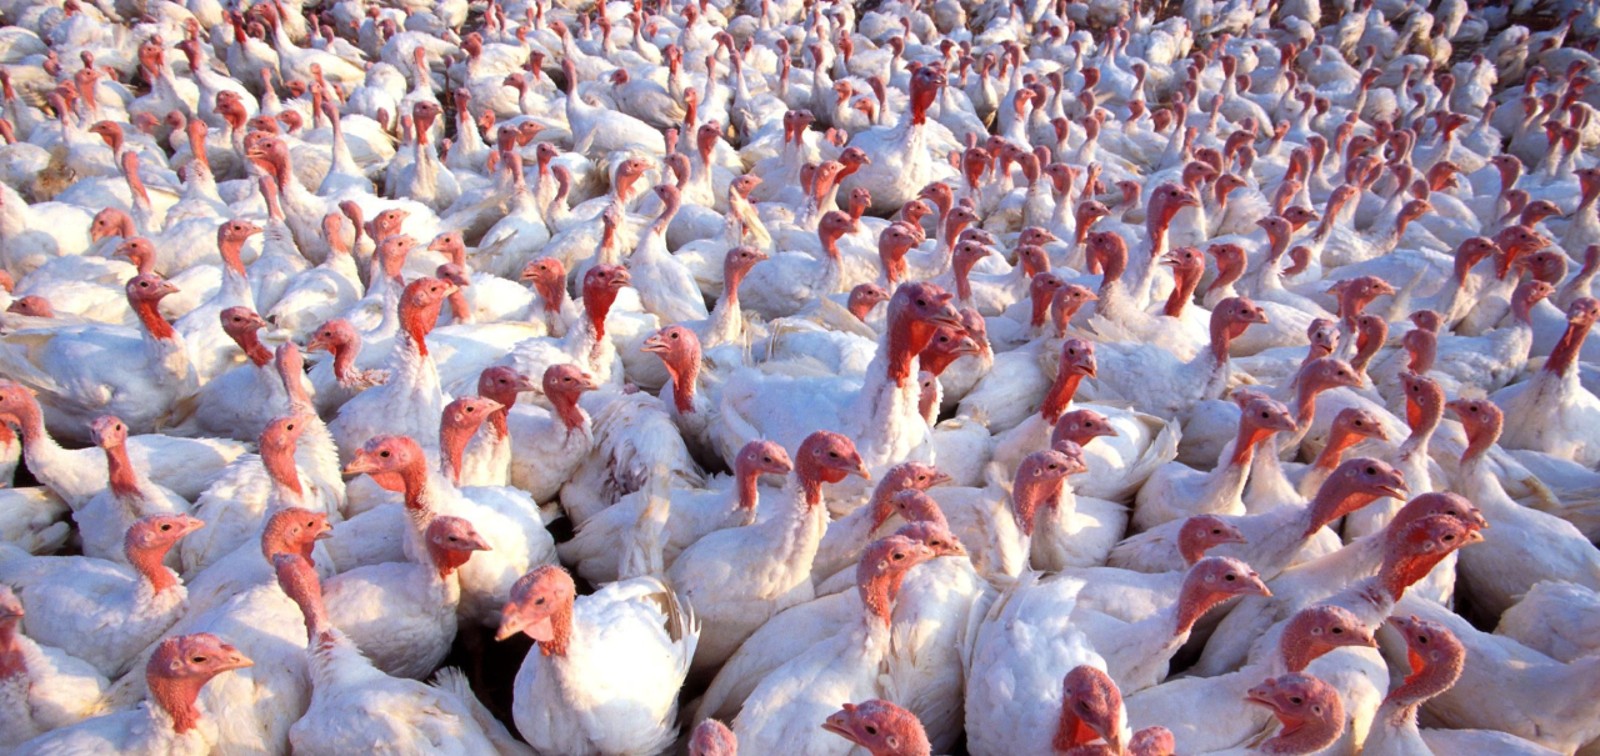 Gripe aviar: ¿debemos preocuparnos?
